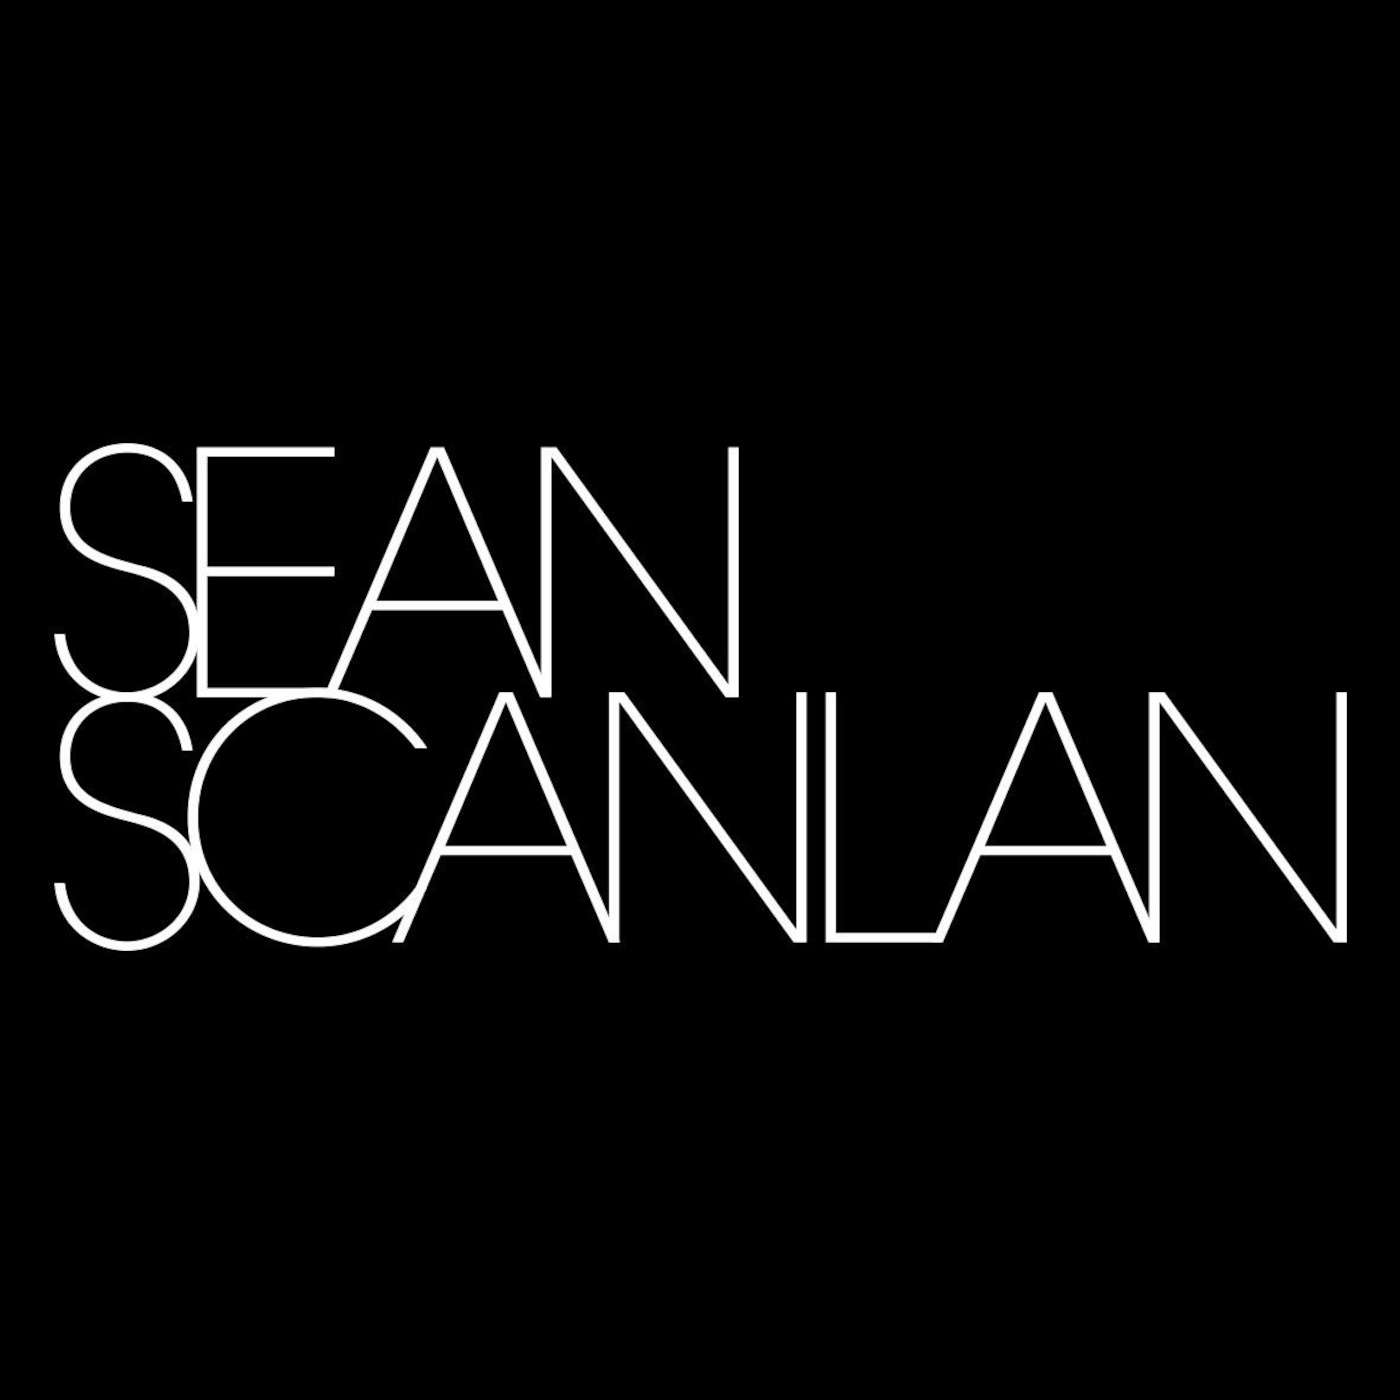 Sean Scanlan's Podcast